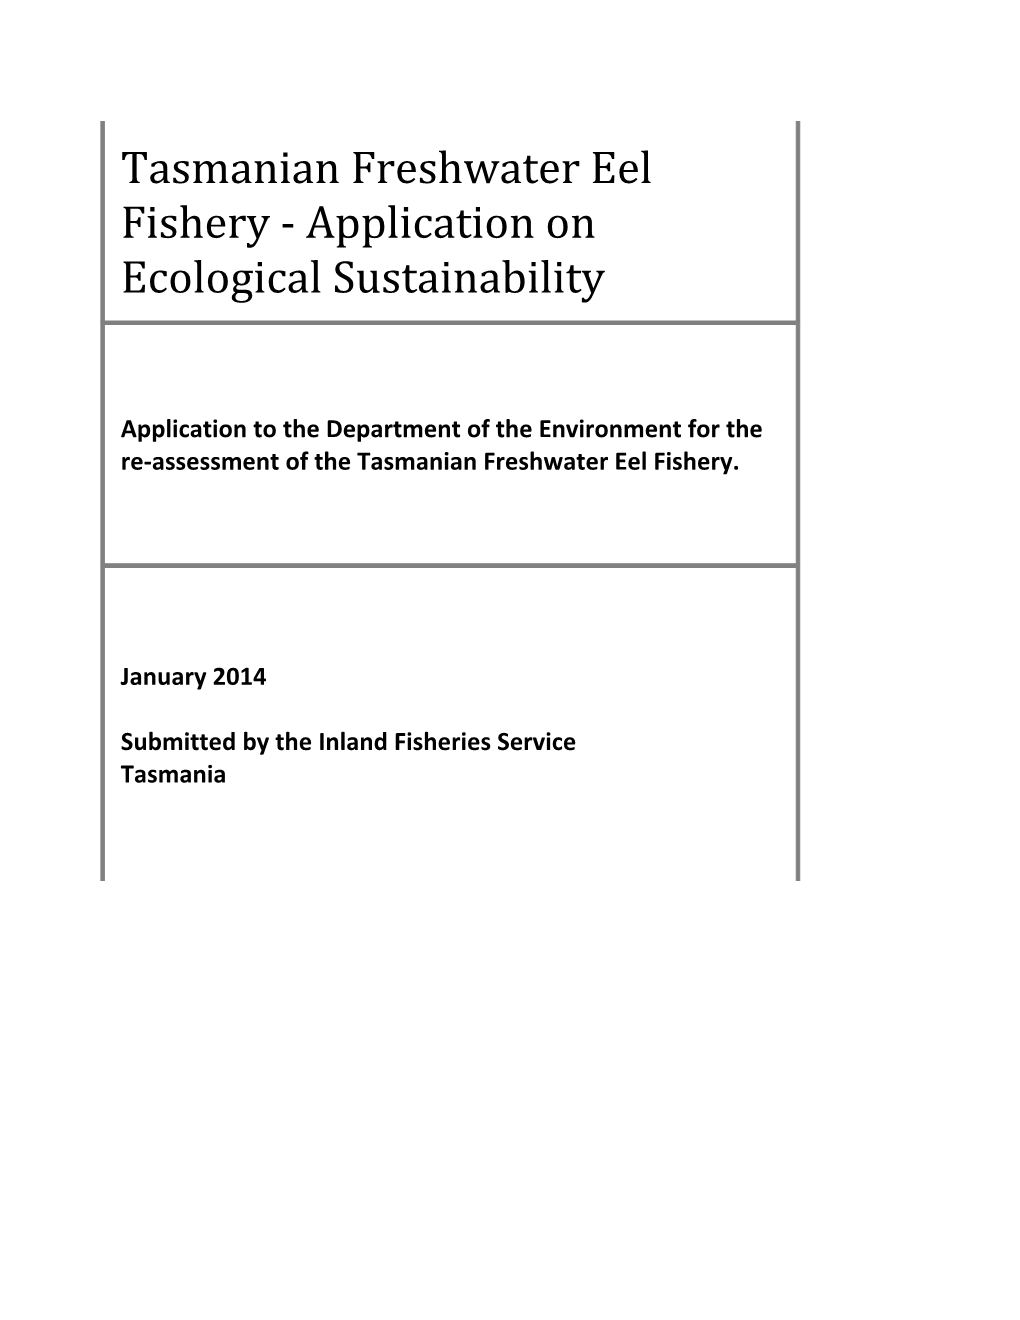 Tasmanian Freshwater Eel Fishery - Application on Ecological Sustainability